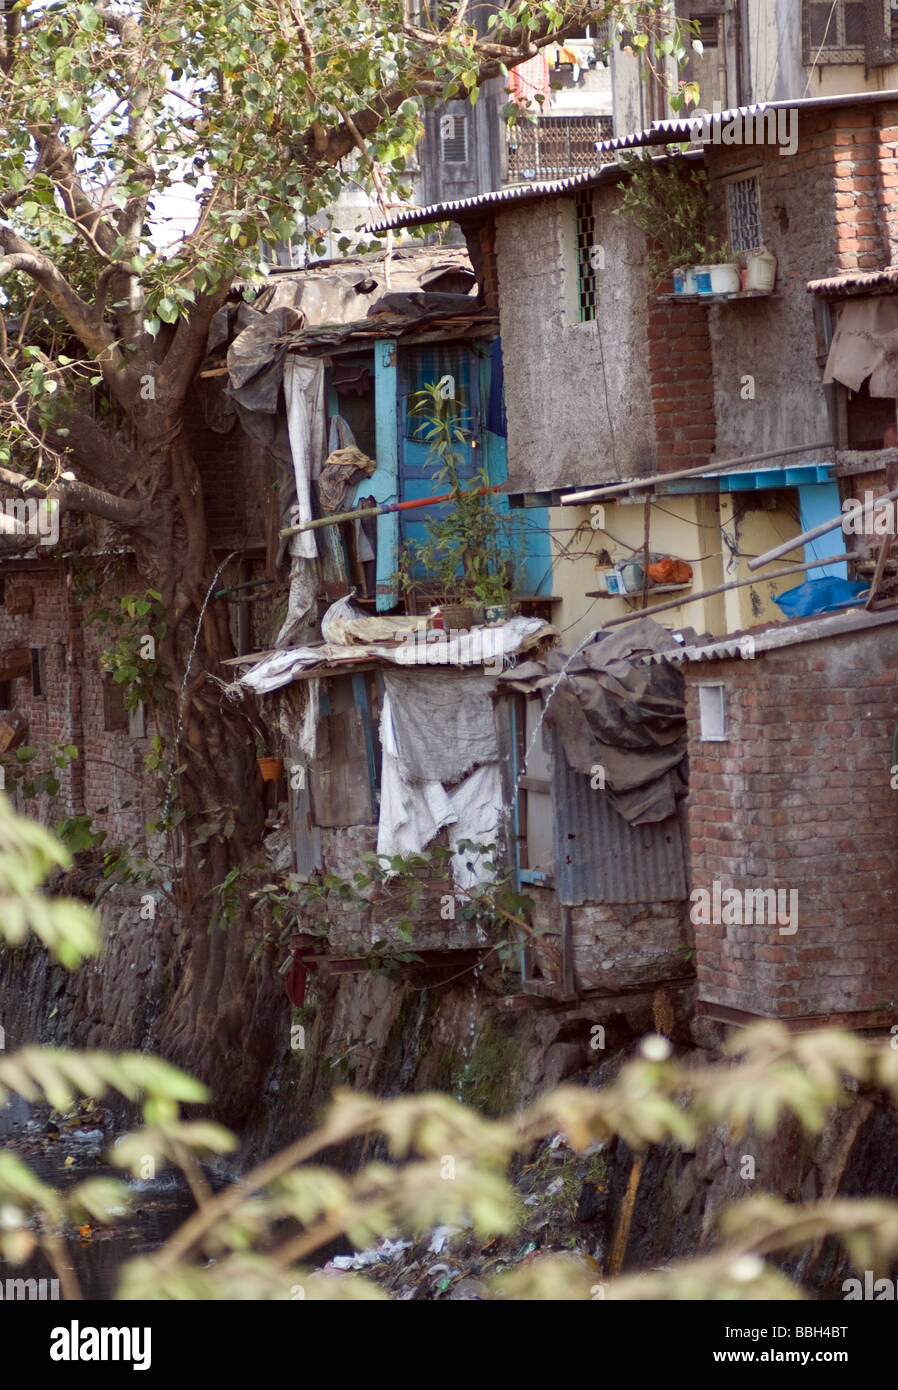 a-view-of-the-mumbai-slums-BBH4BT.jpg